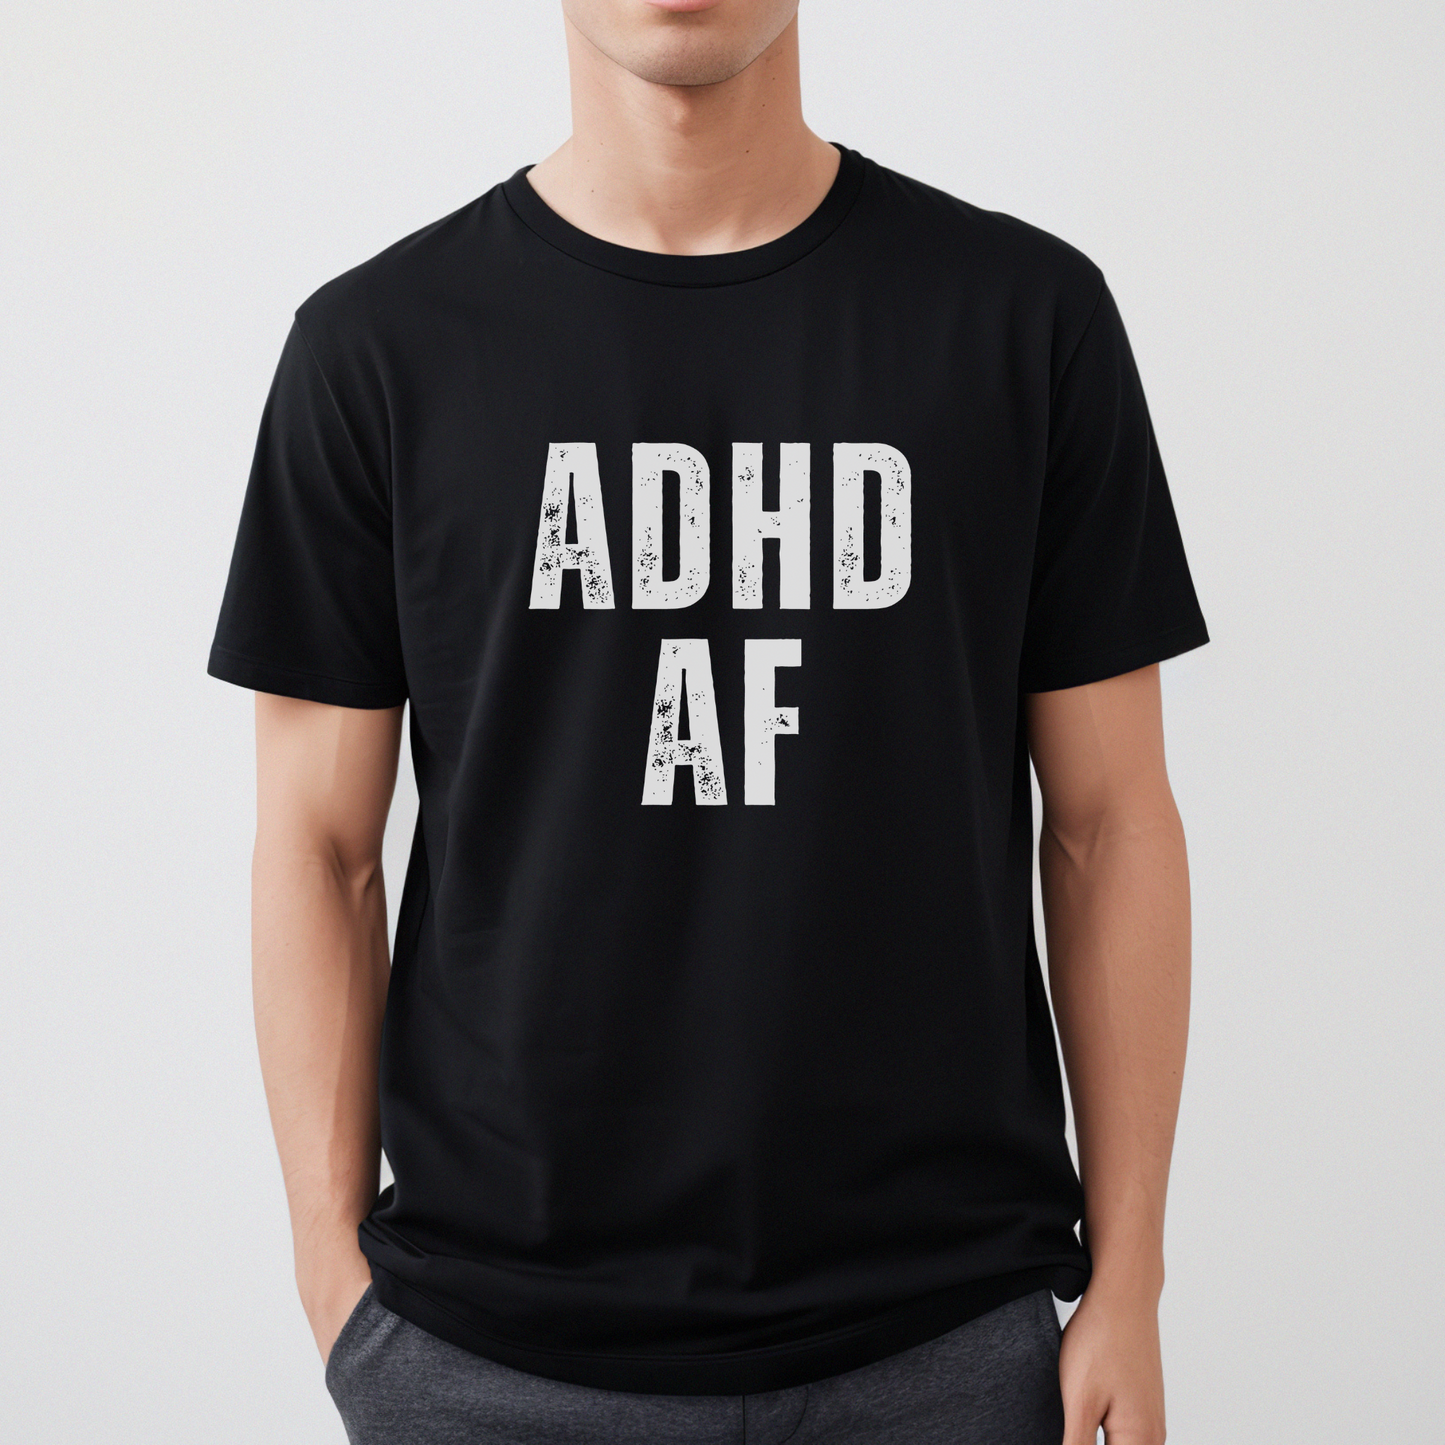 ADHD AF Funny Unisex T-Shirt Looper Tees